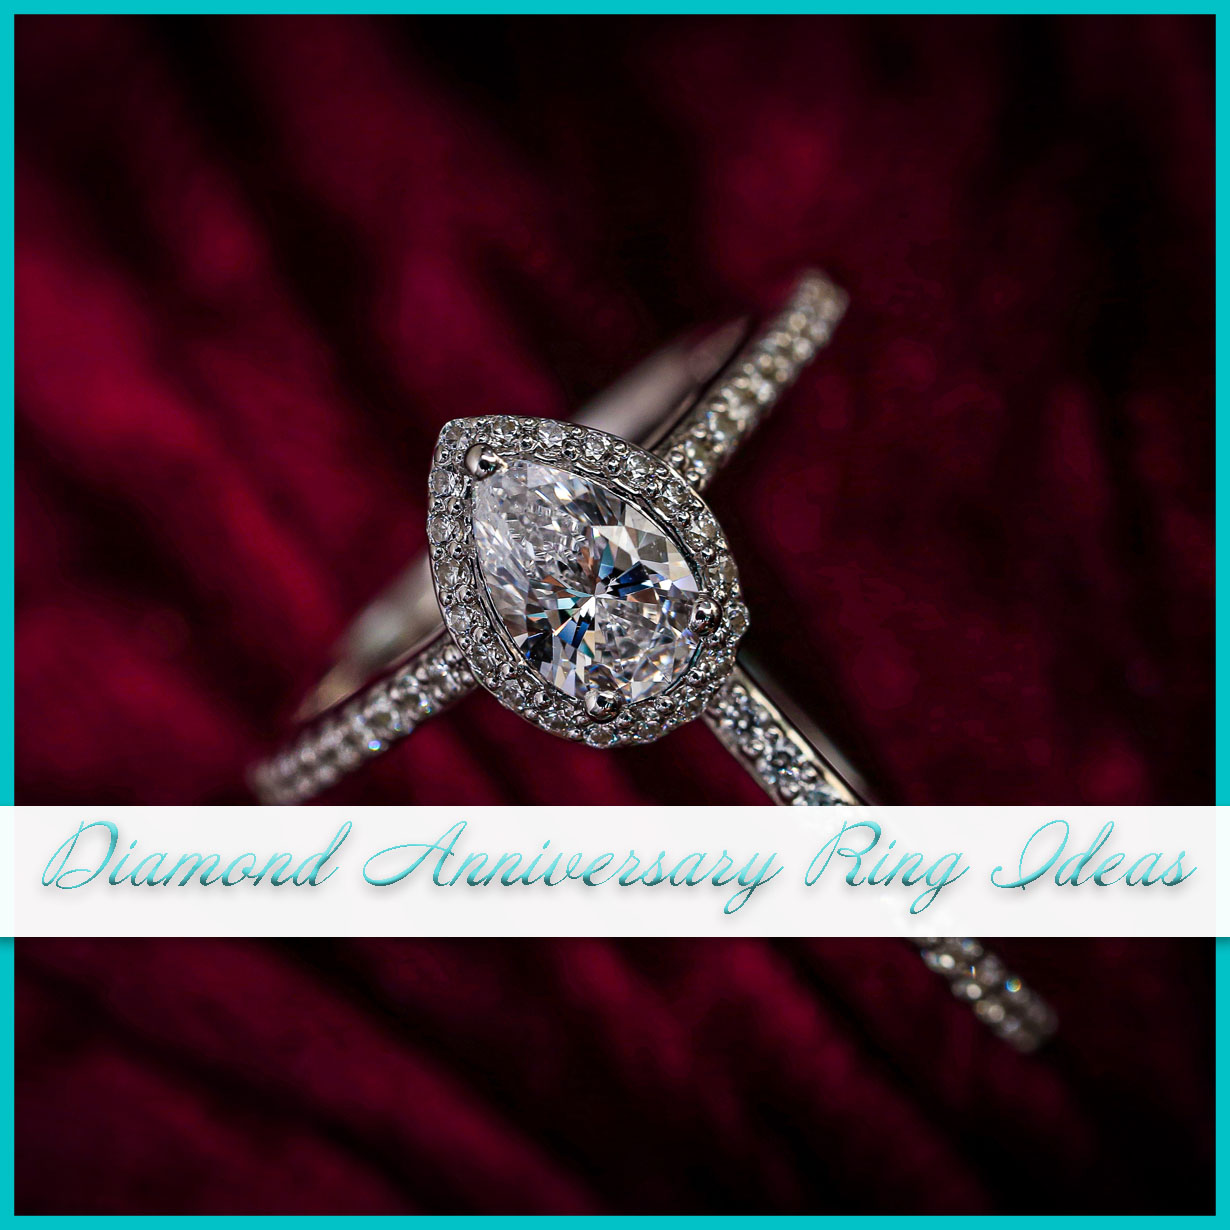 Diamond Anniversary Ring Ideas